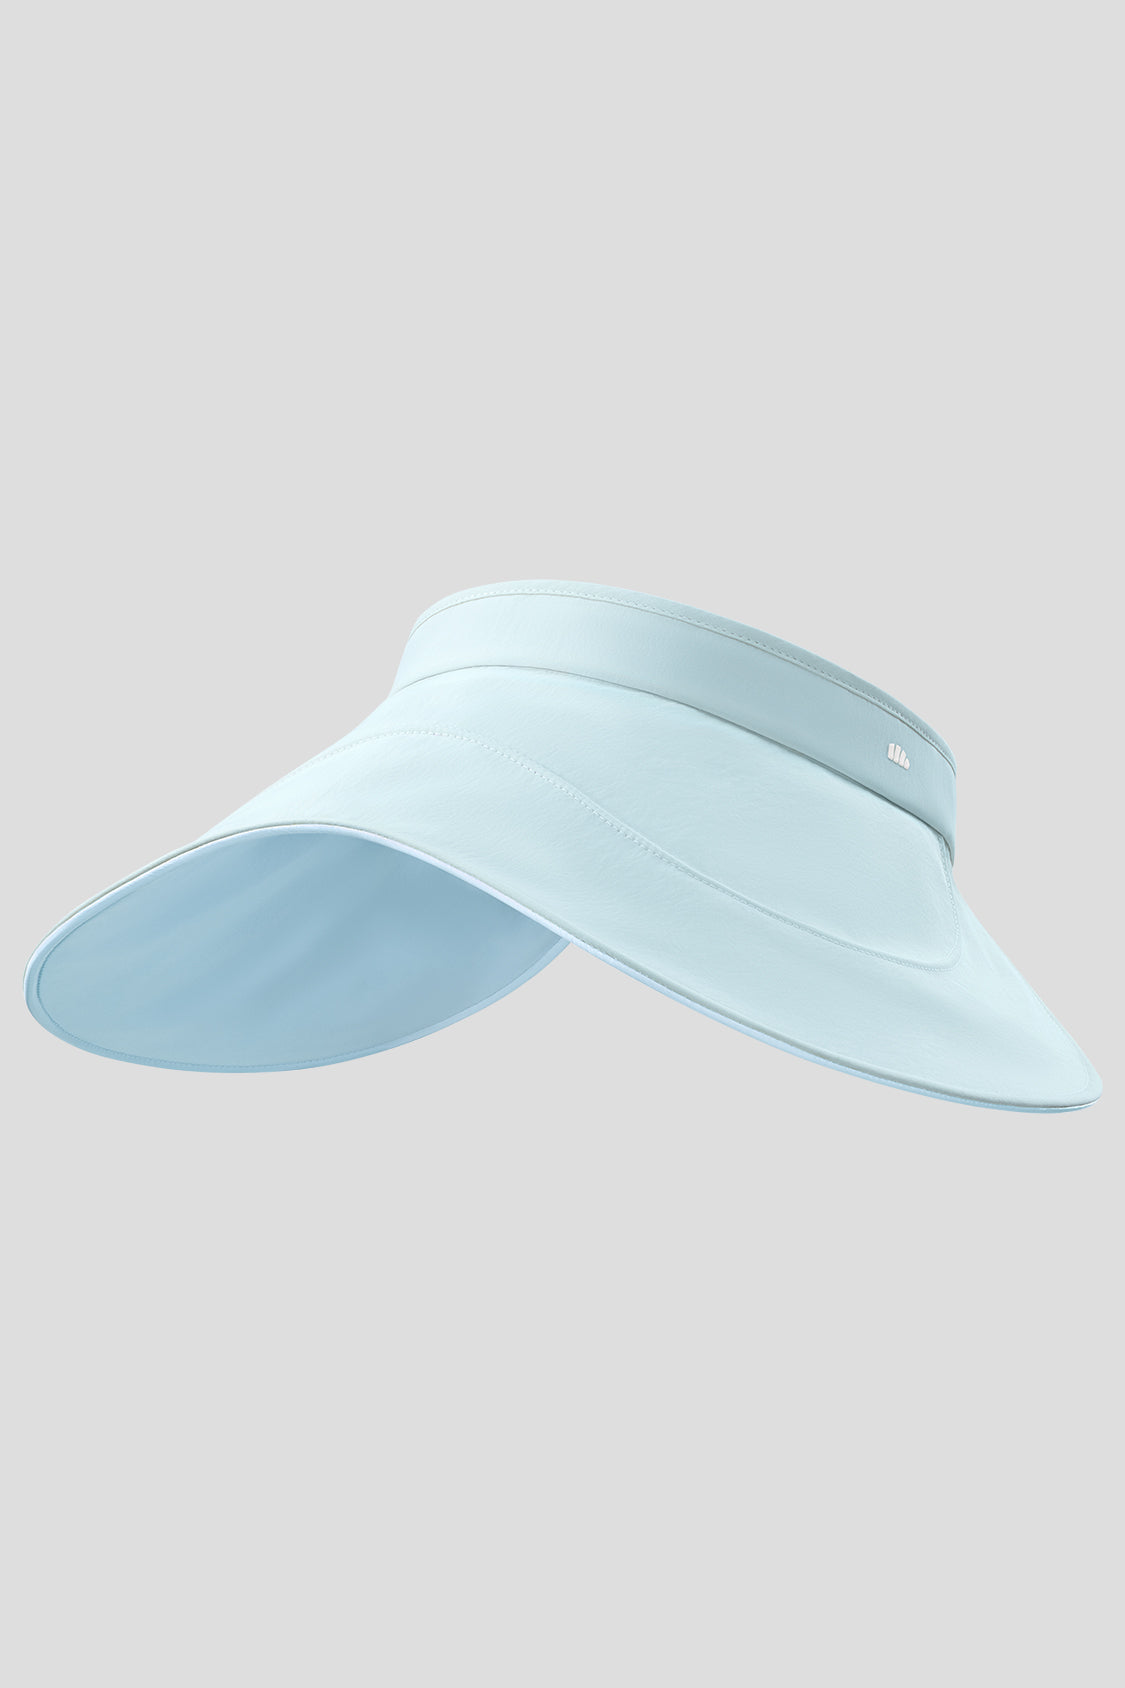 Sun Hat for Women, Beneunder UPF50+ Packable Wide Brim UV Protection Sun Visor Hat Coconut White / One Size - Adjustable